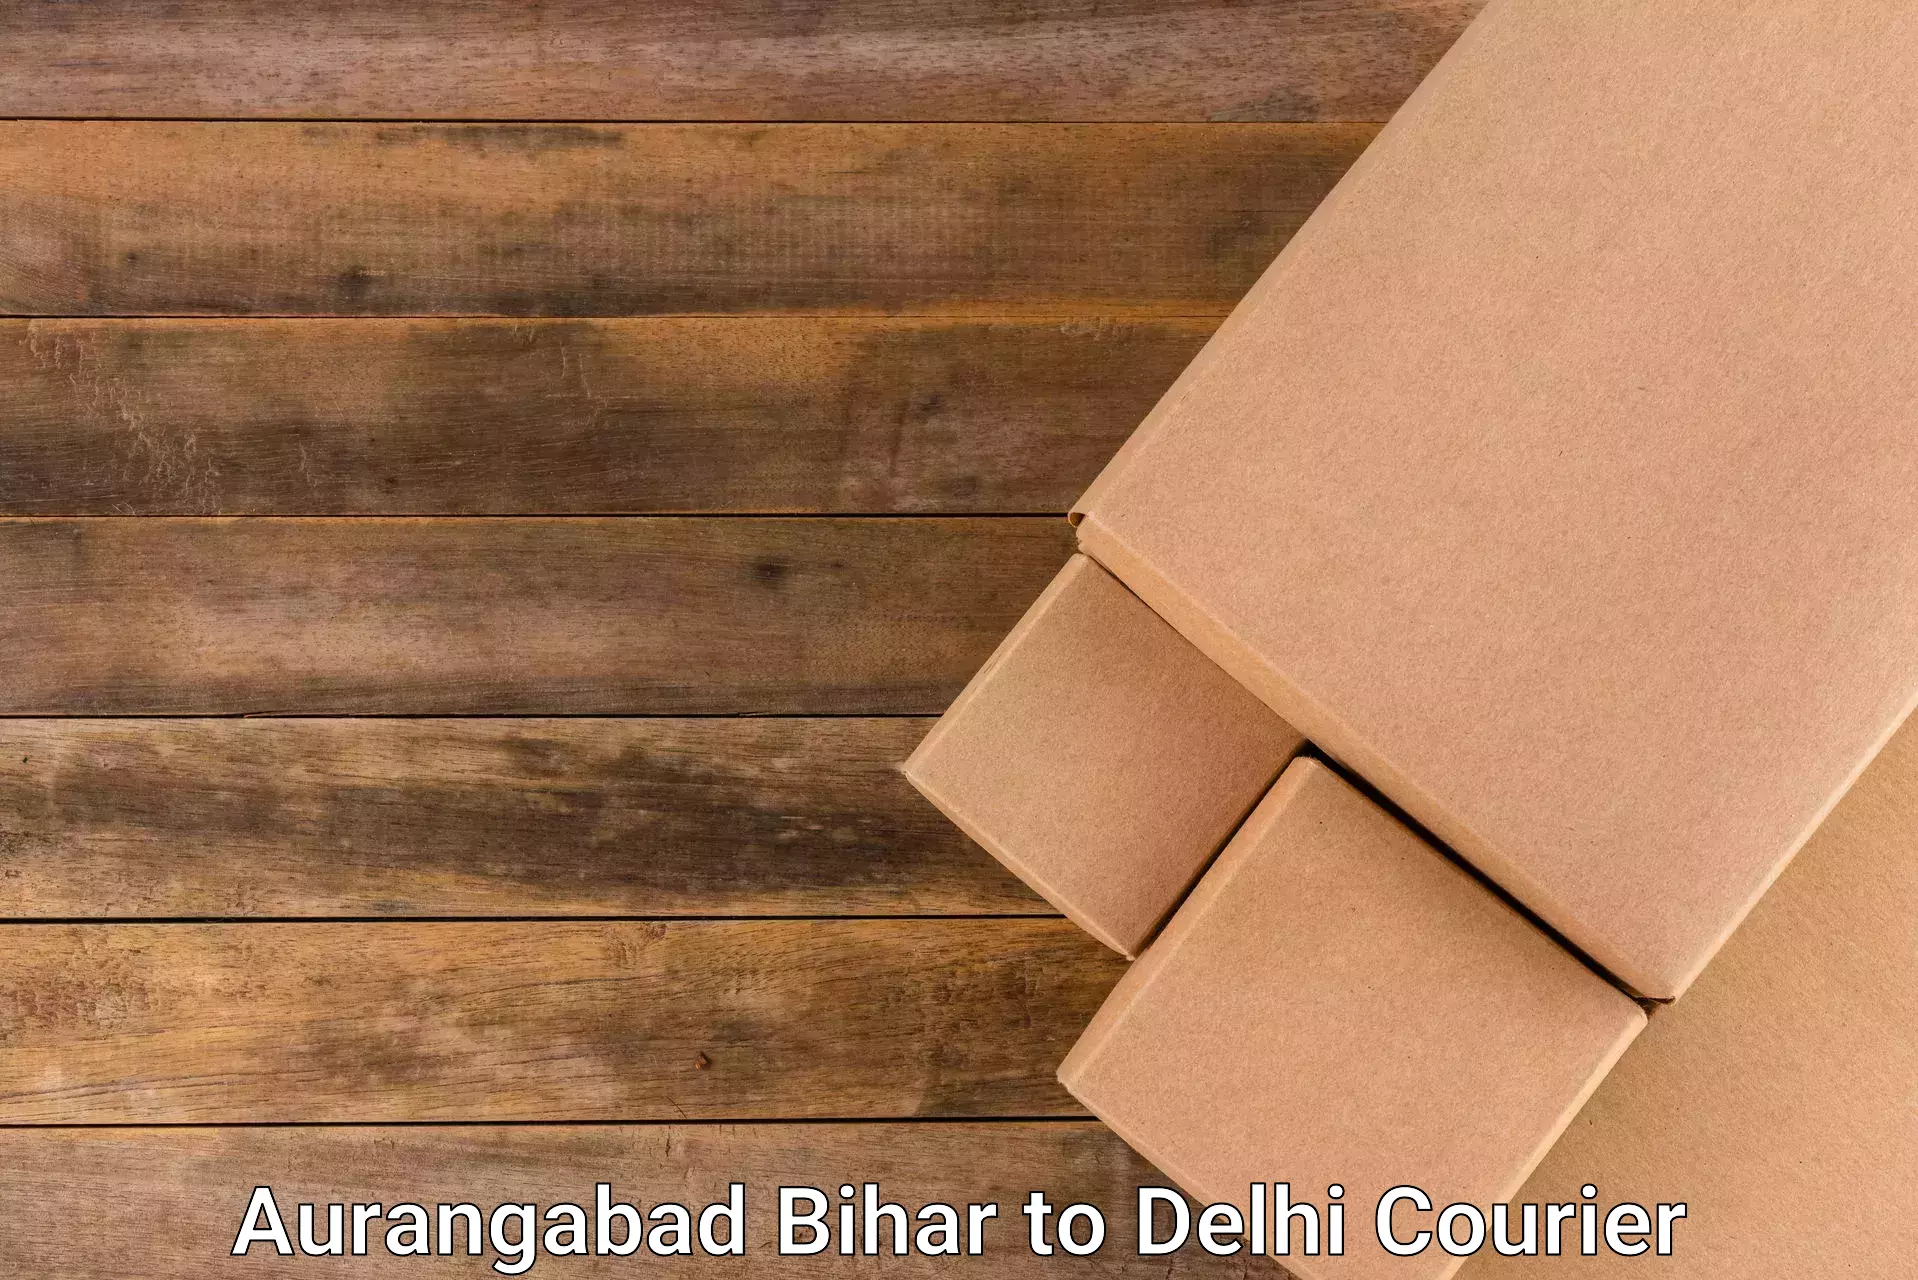 Professional delivery solutions Aurangabad Bihar to Lodhi Road